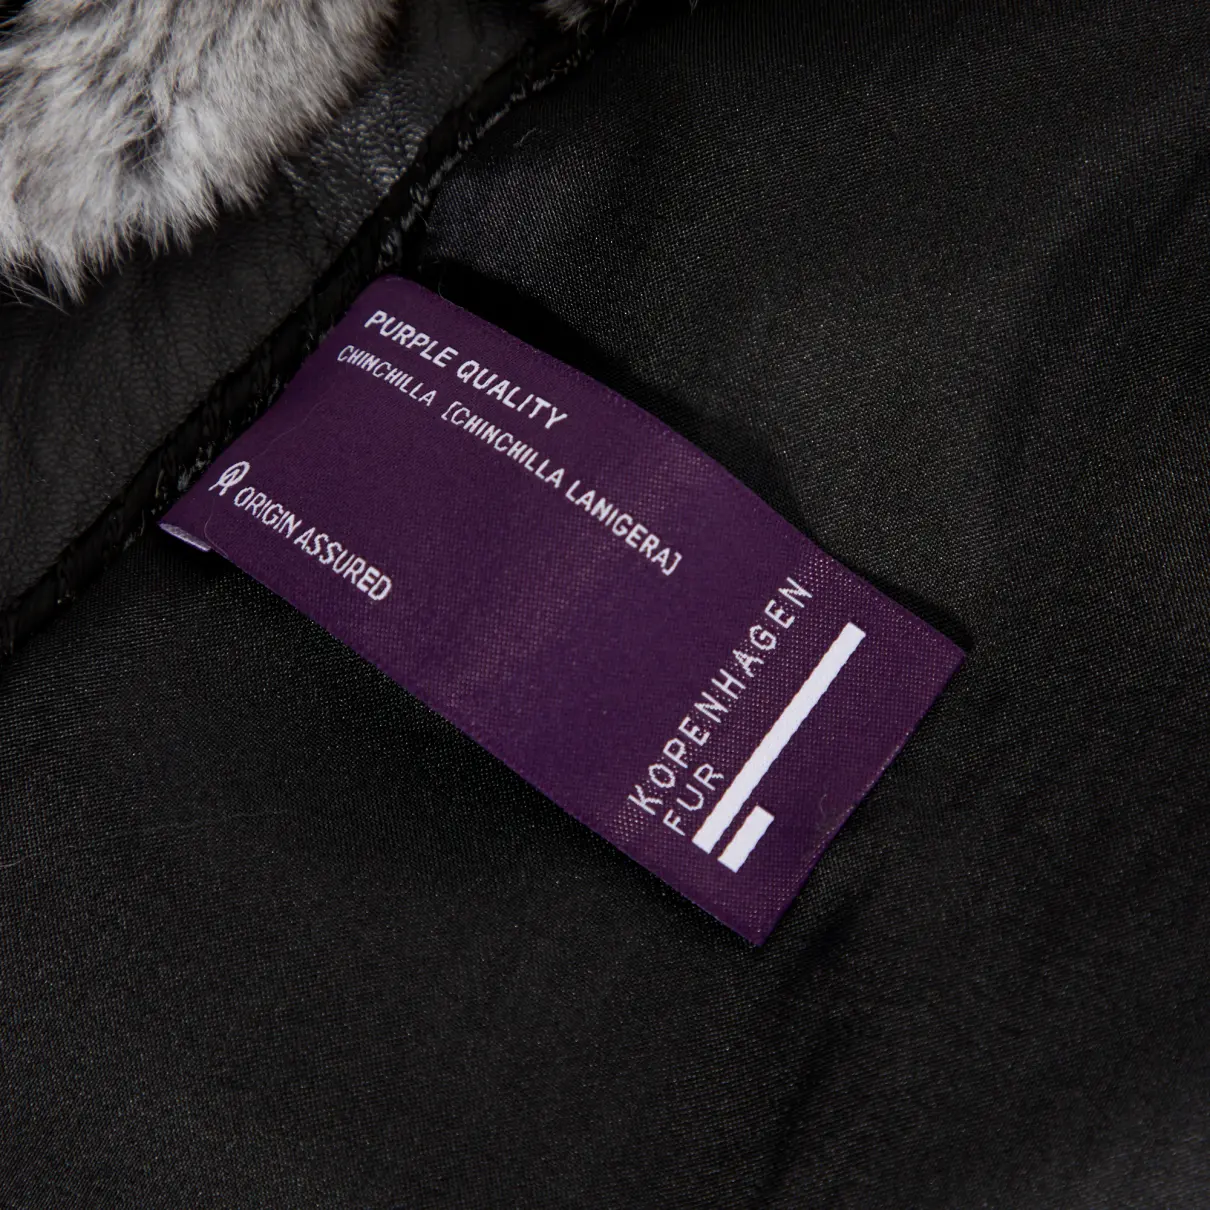 Chinchilla coat Kopenhagen Fur